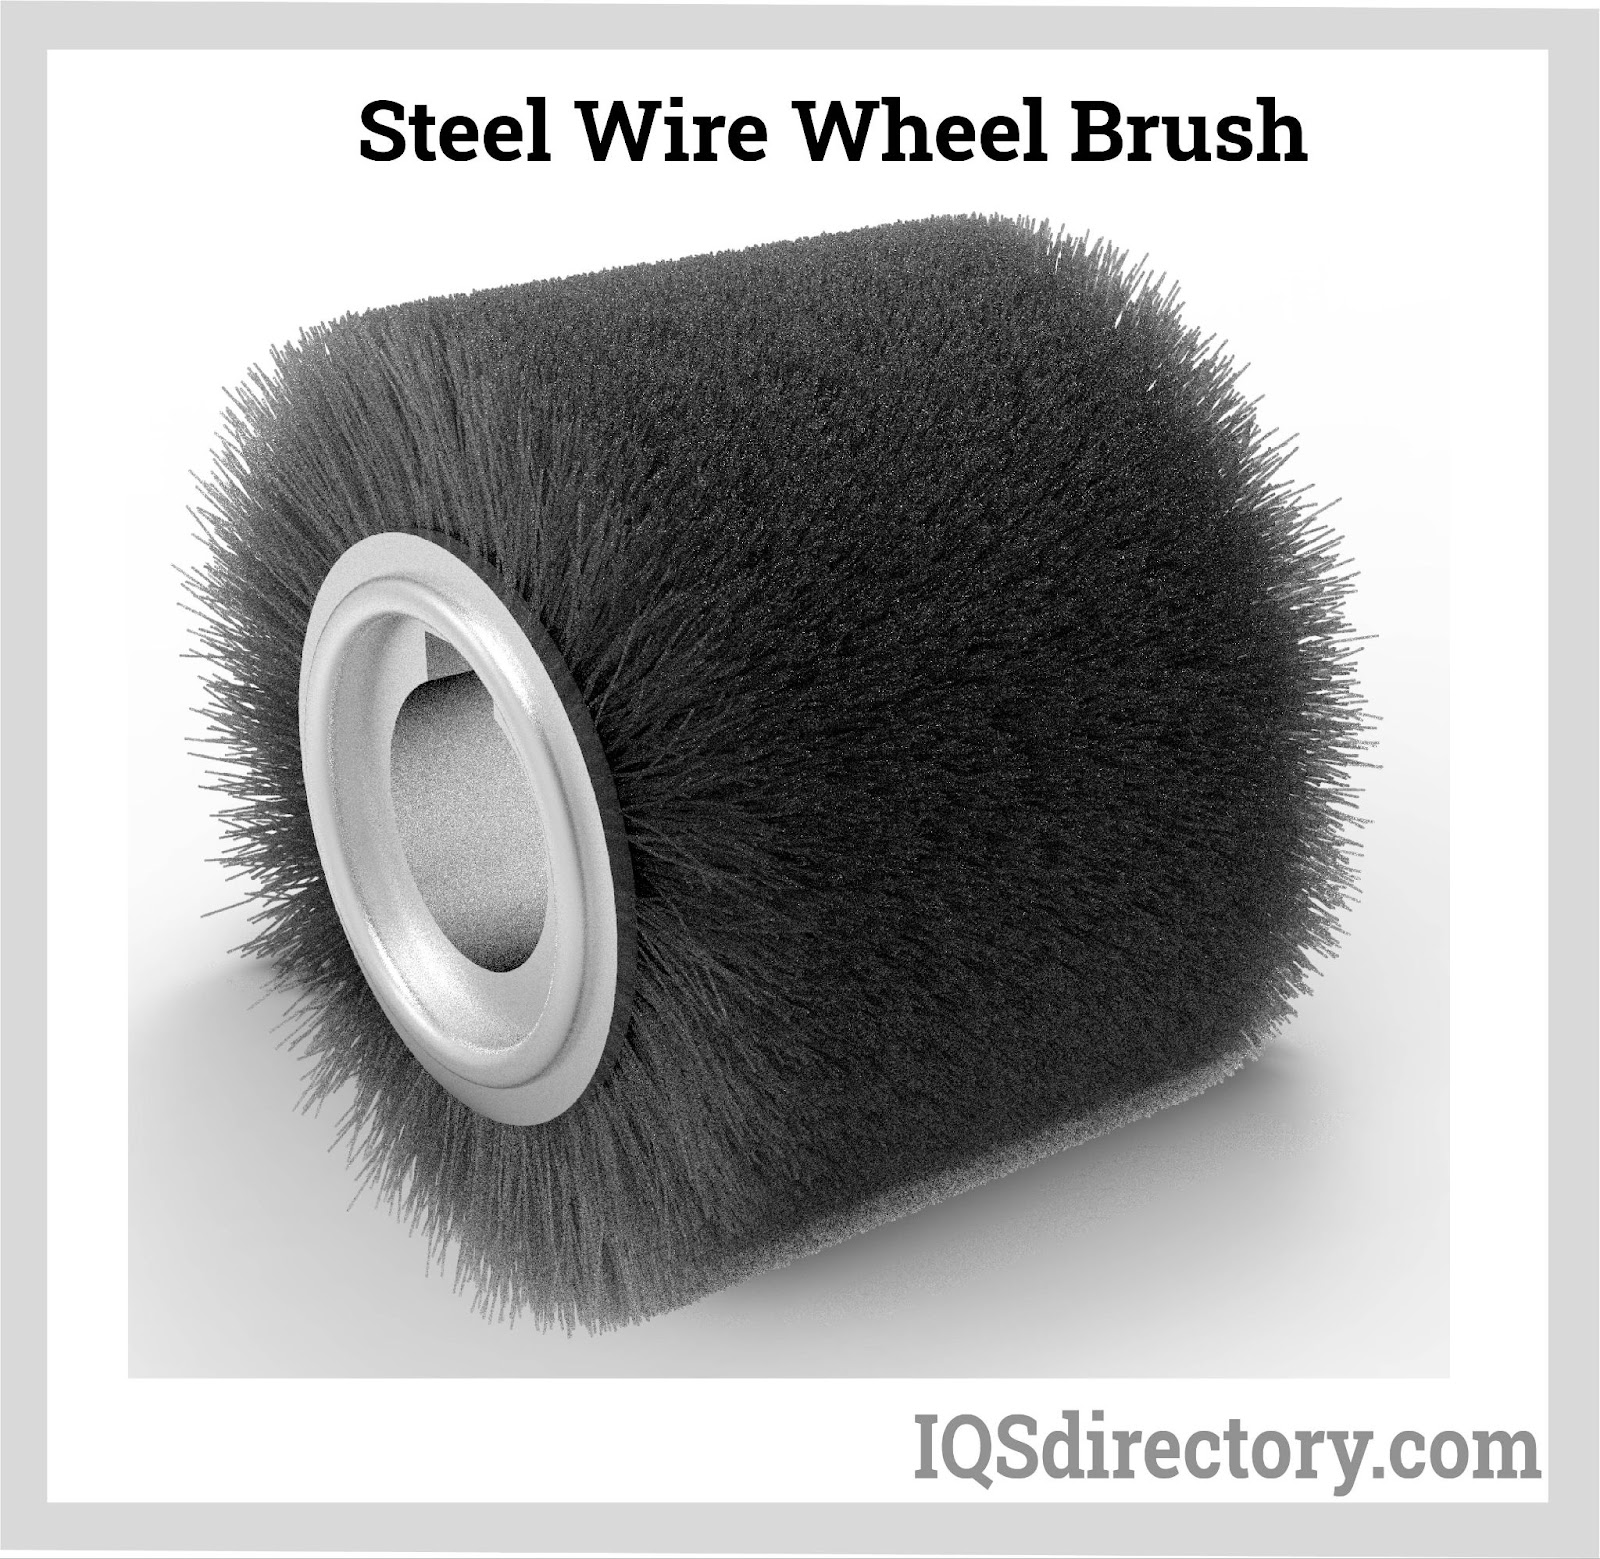 Steel Wire Wheel Brush